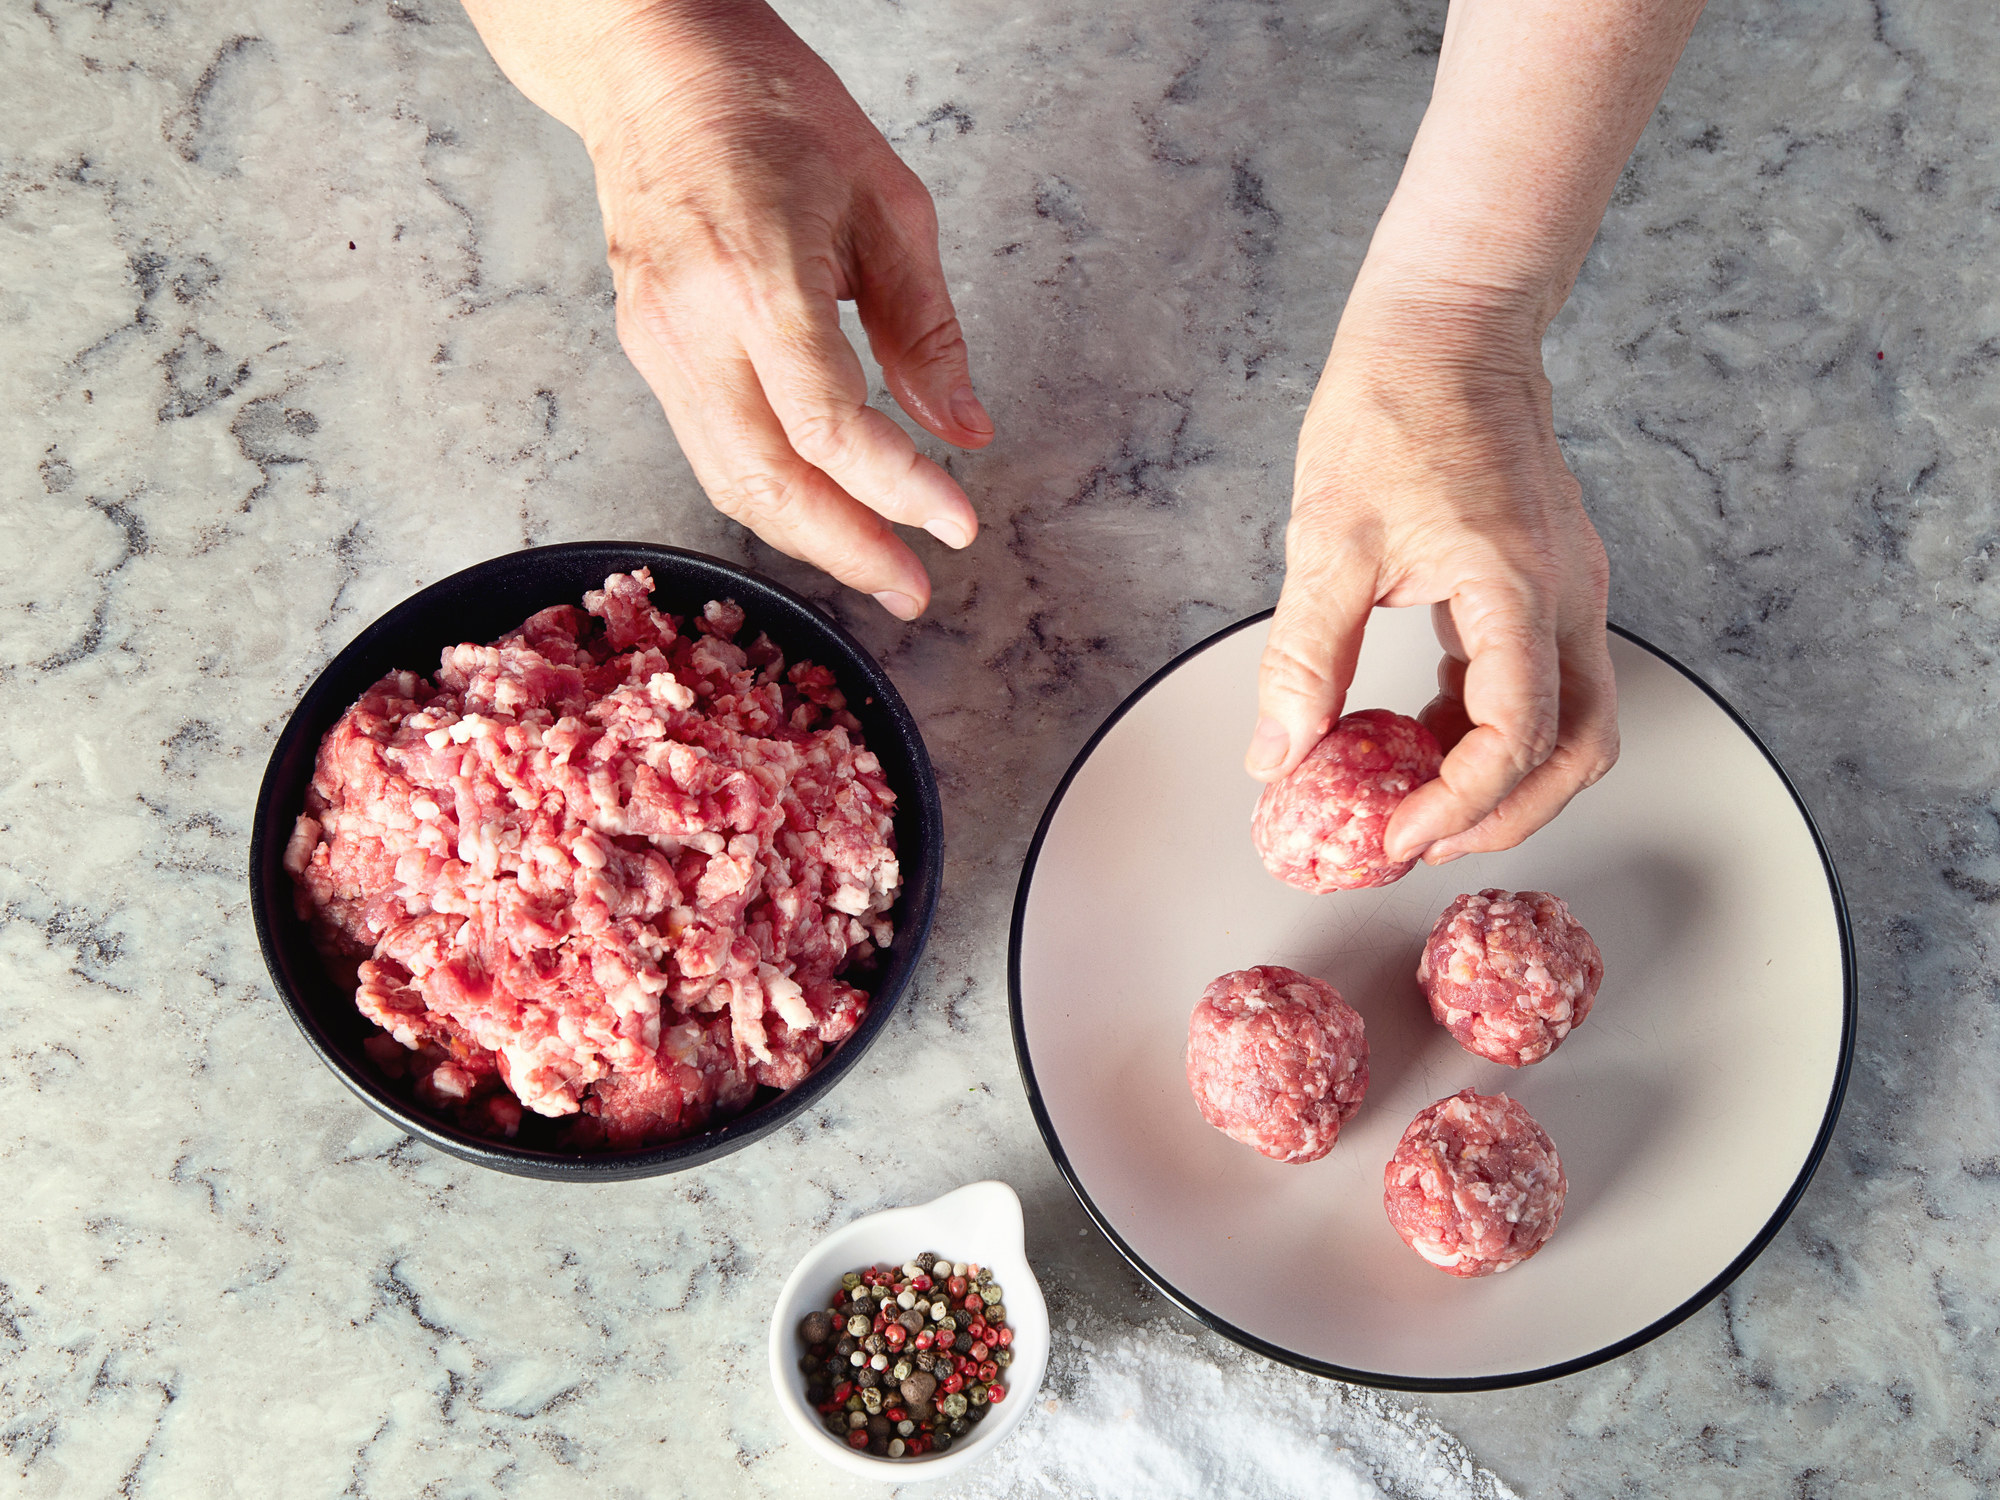 Making meatballs.